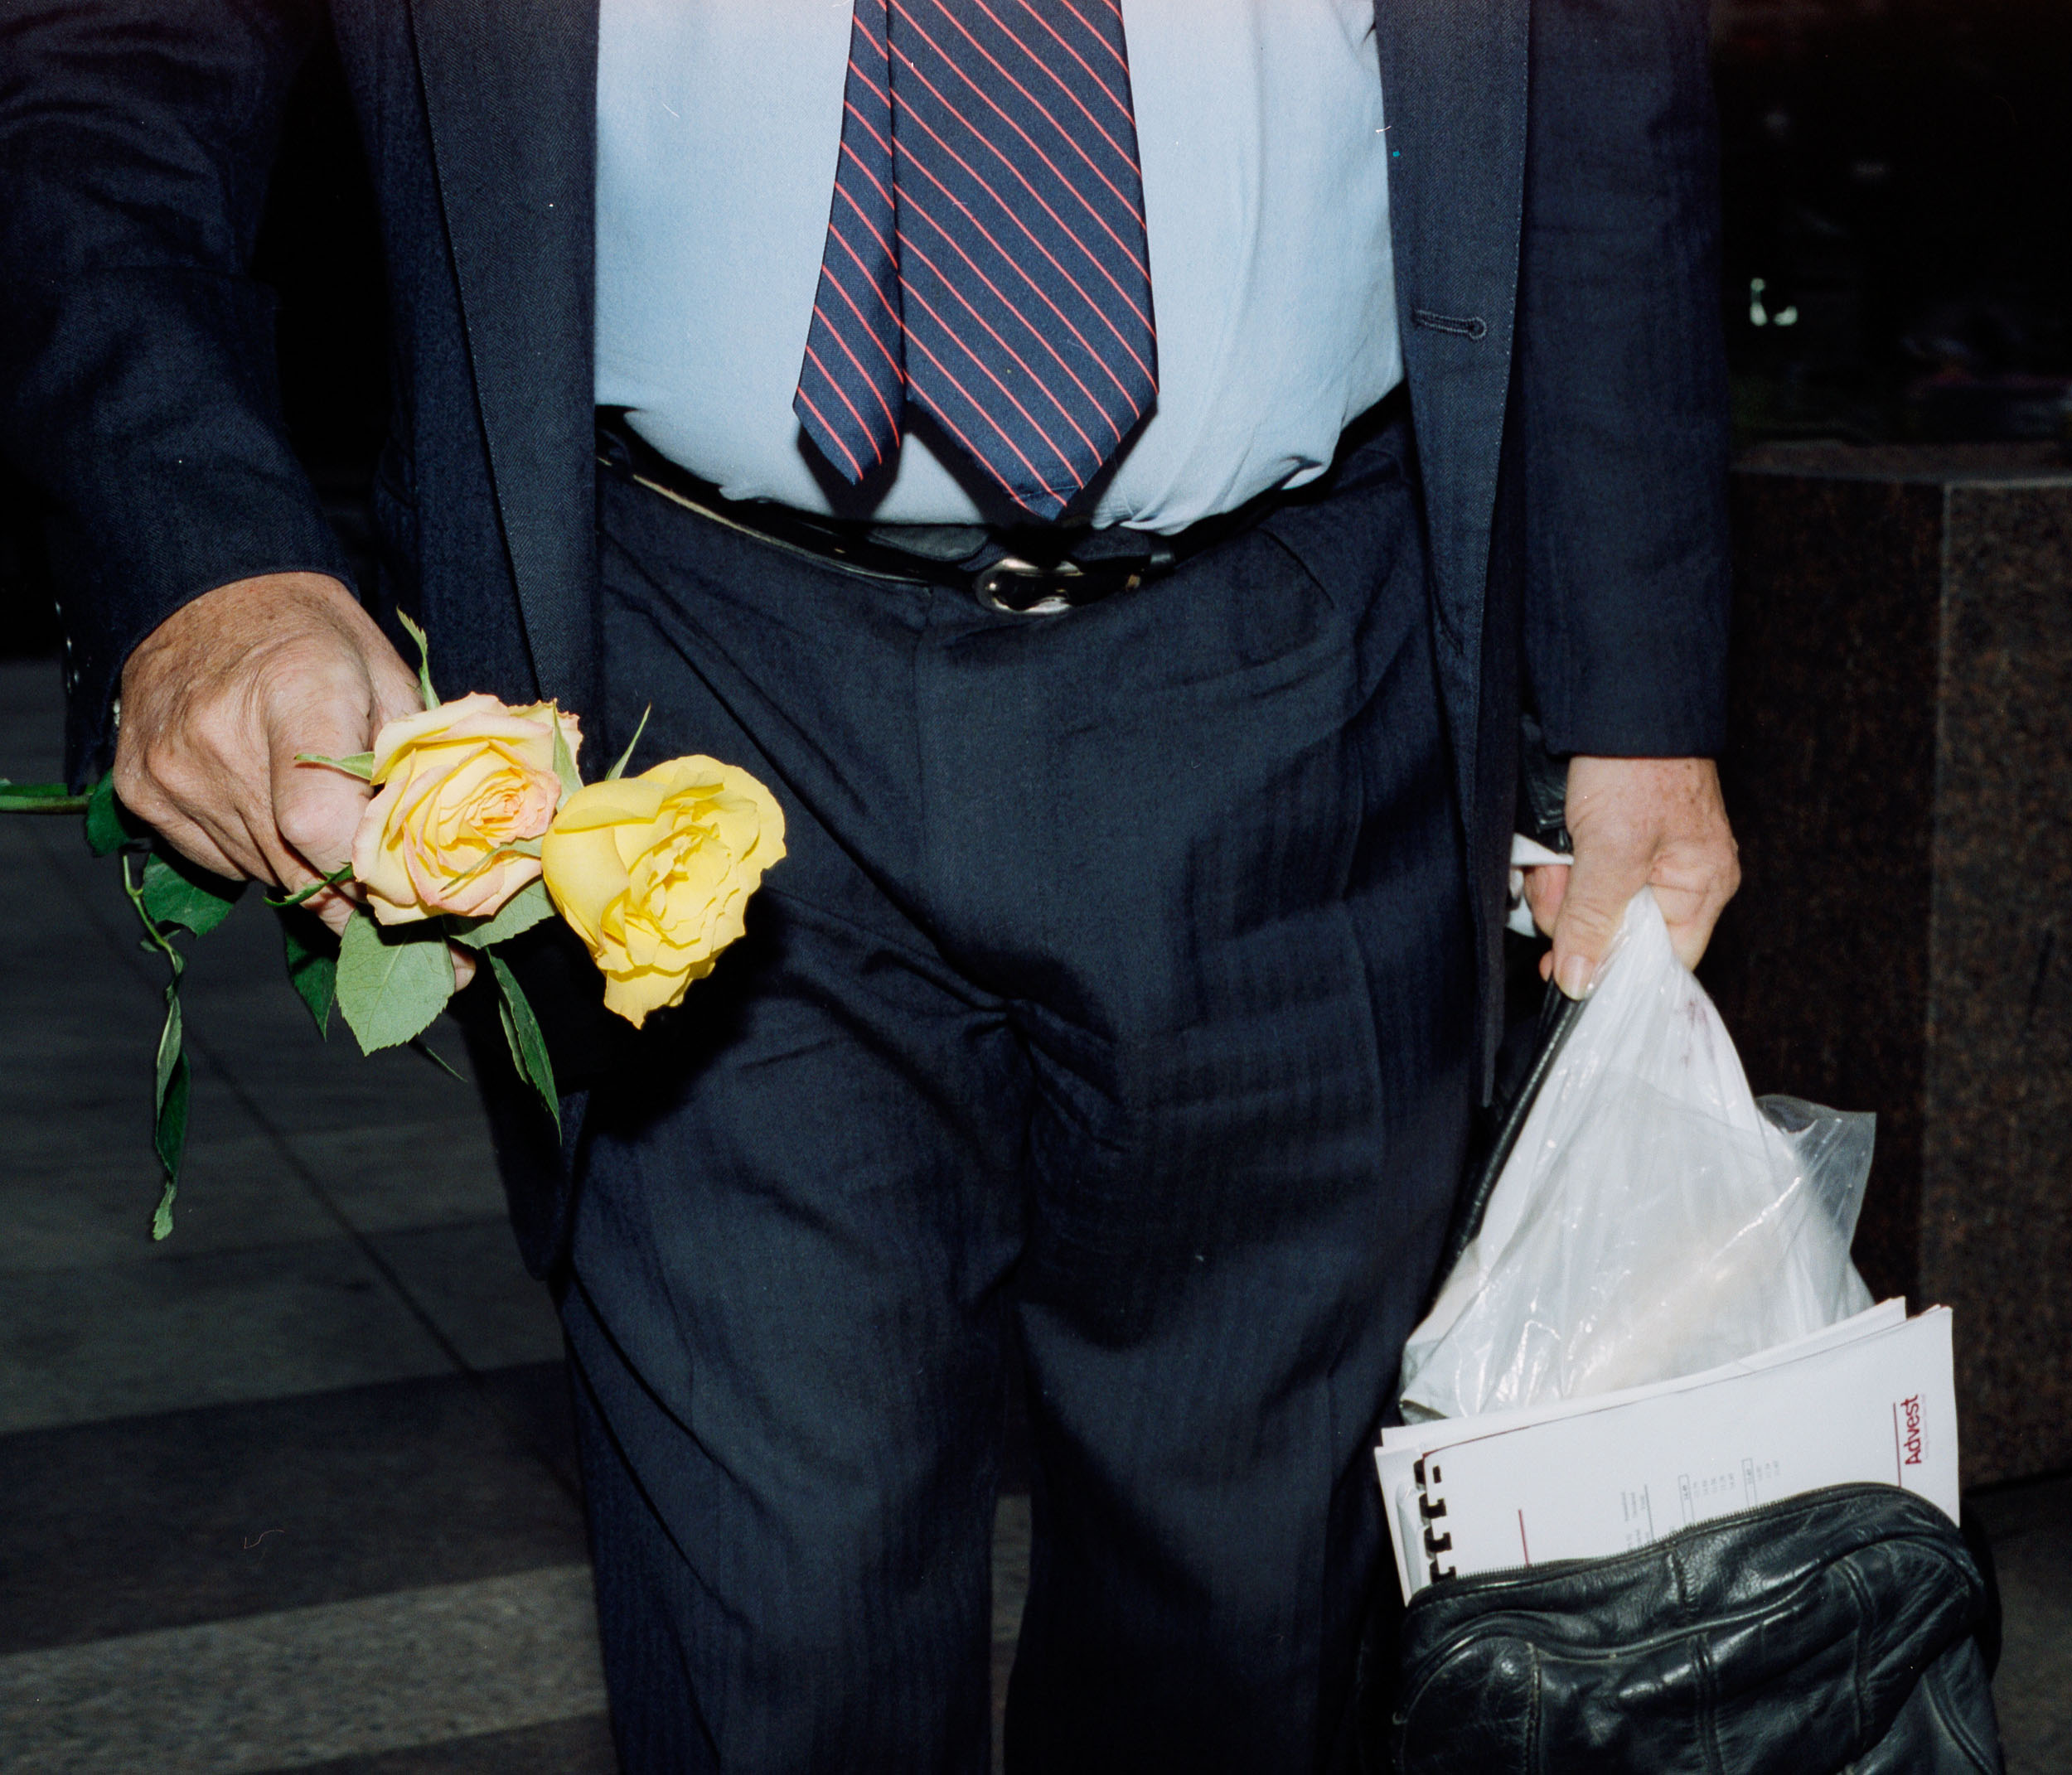 bag and flowers.jpg